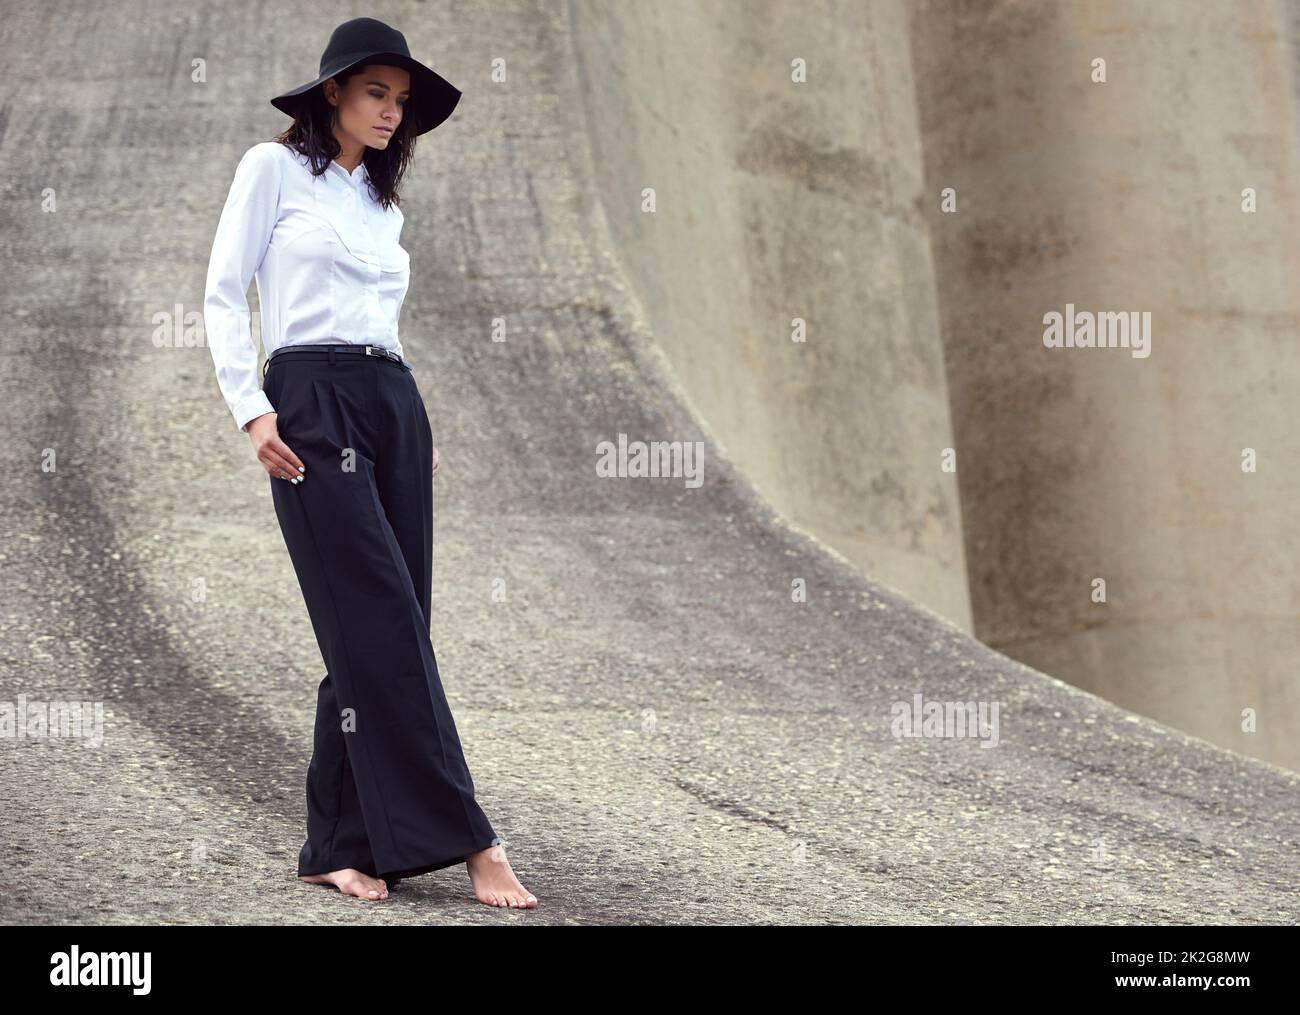 Fashion in an urban jungle. Full length shot of a beautiful fashion model posing in an empty urban setting. Stock Photo